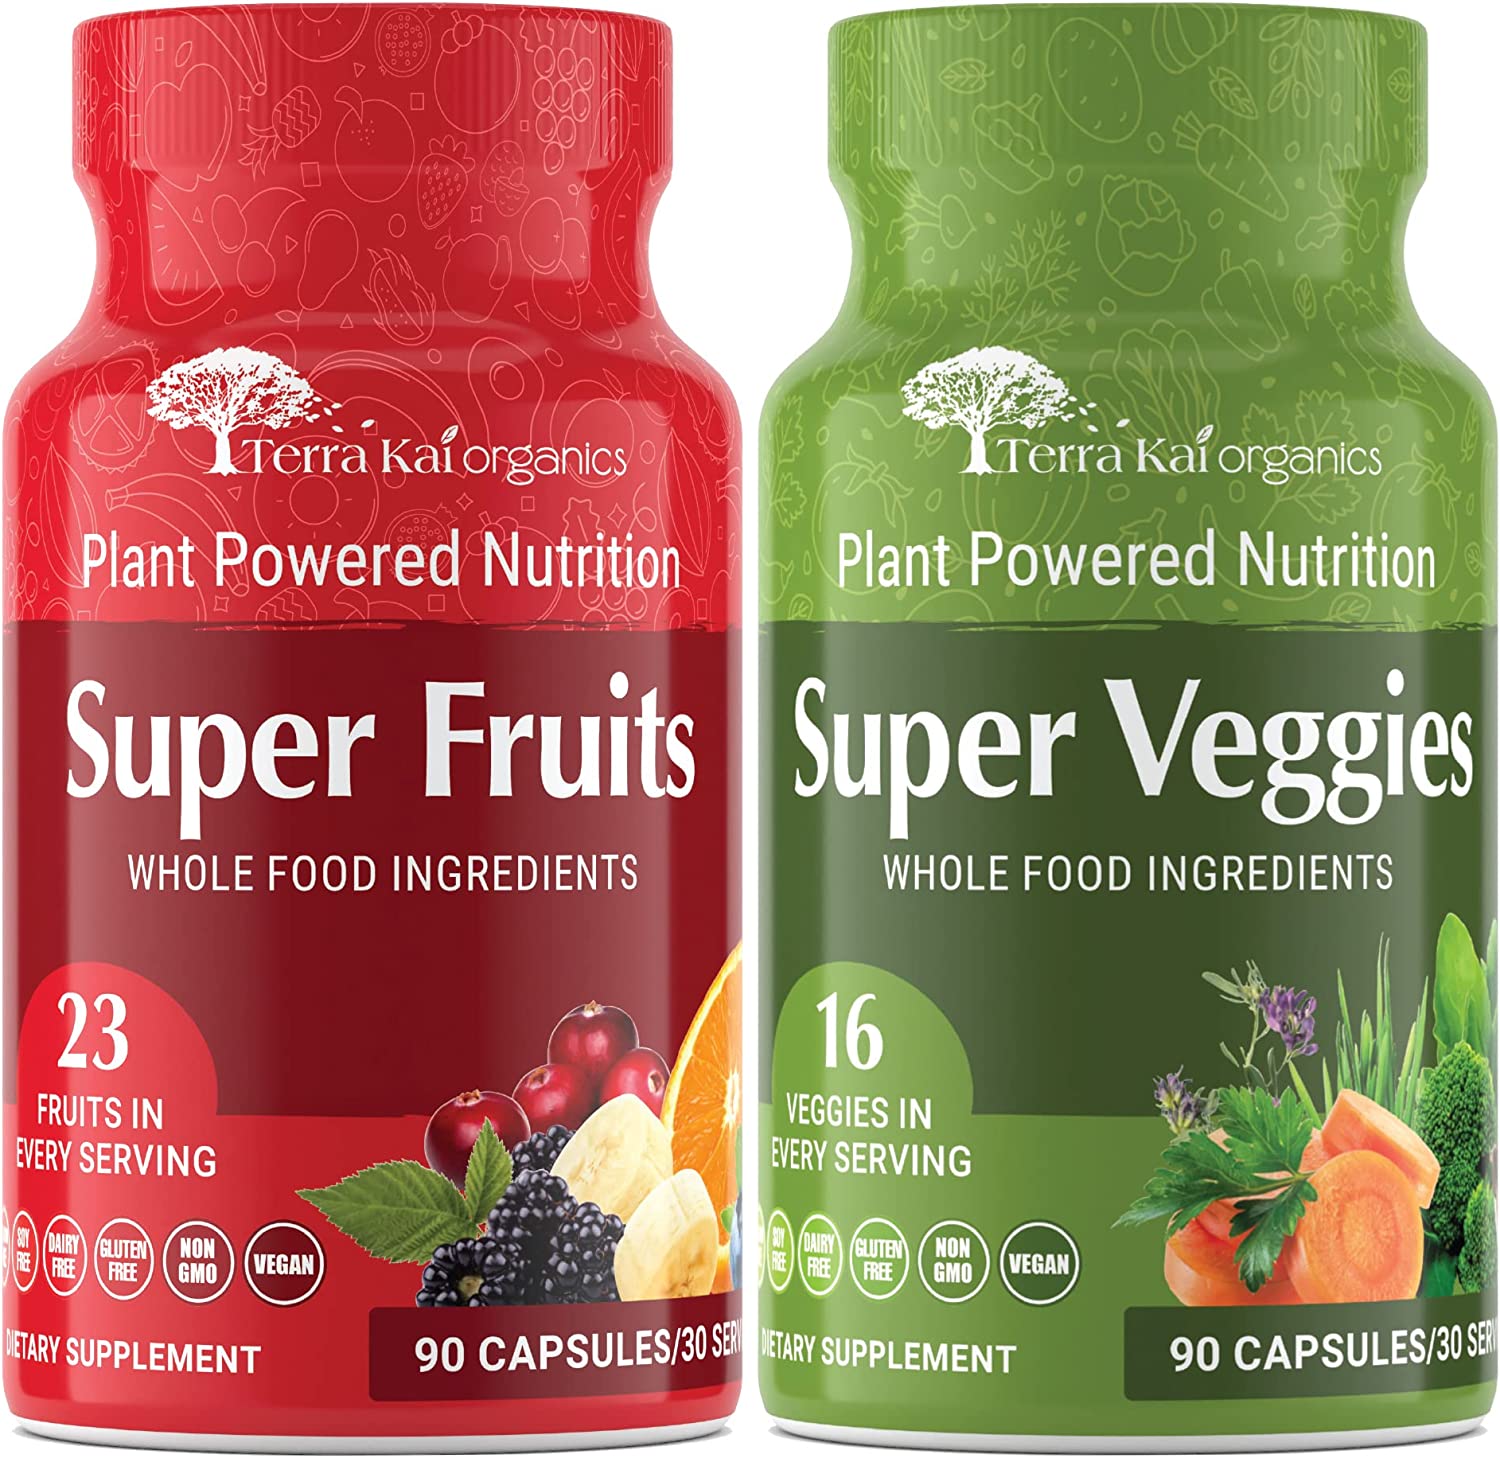 Terra Kai Organics Super Fruits and Veggies Supplement Gluten Free